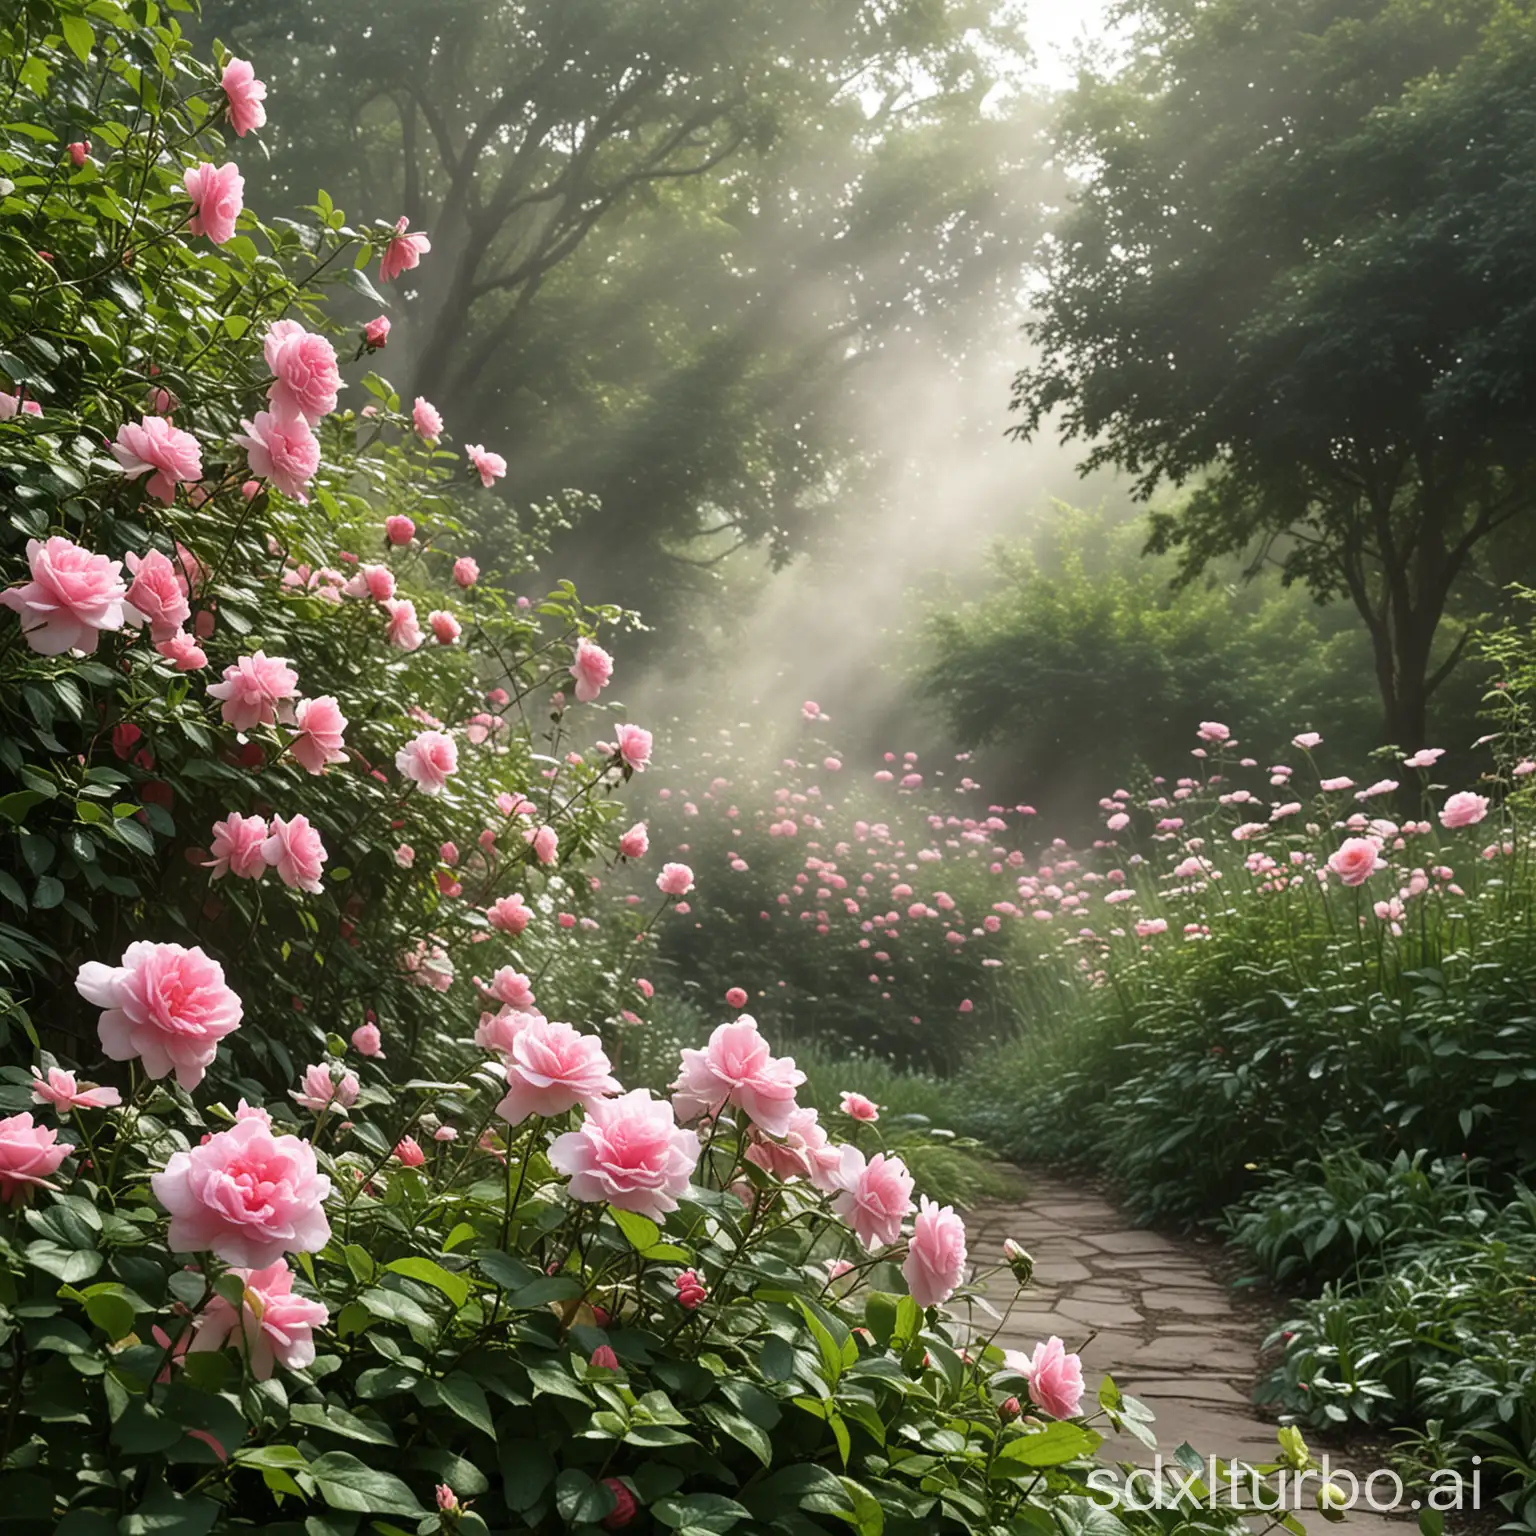 Vivid rosewater mists envelop the garden air, delicate